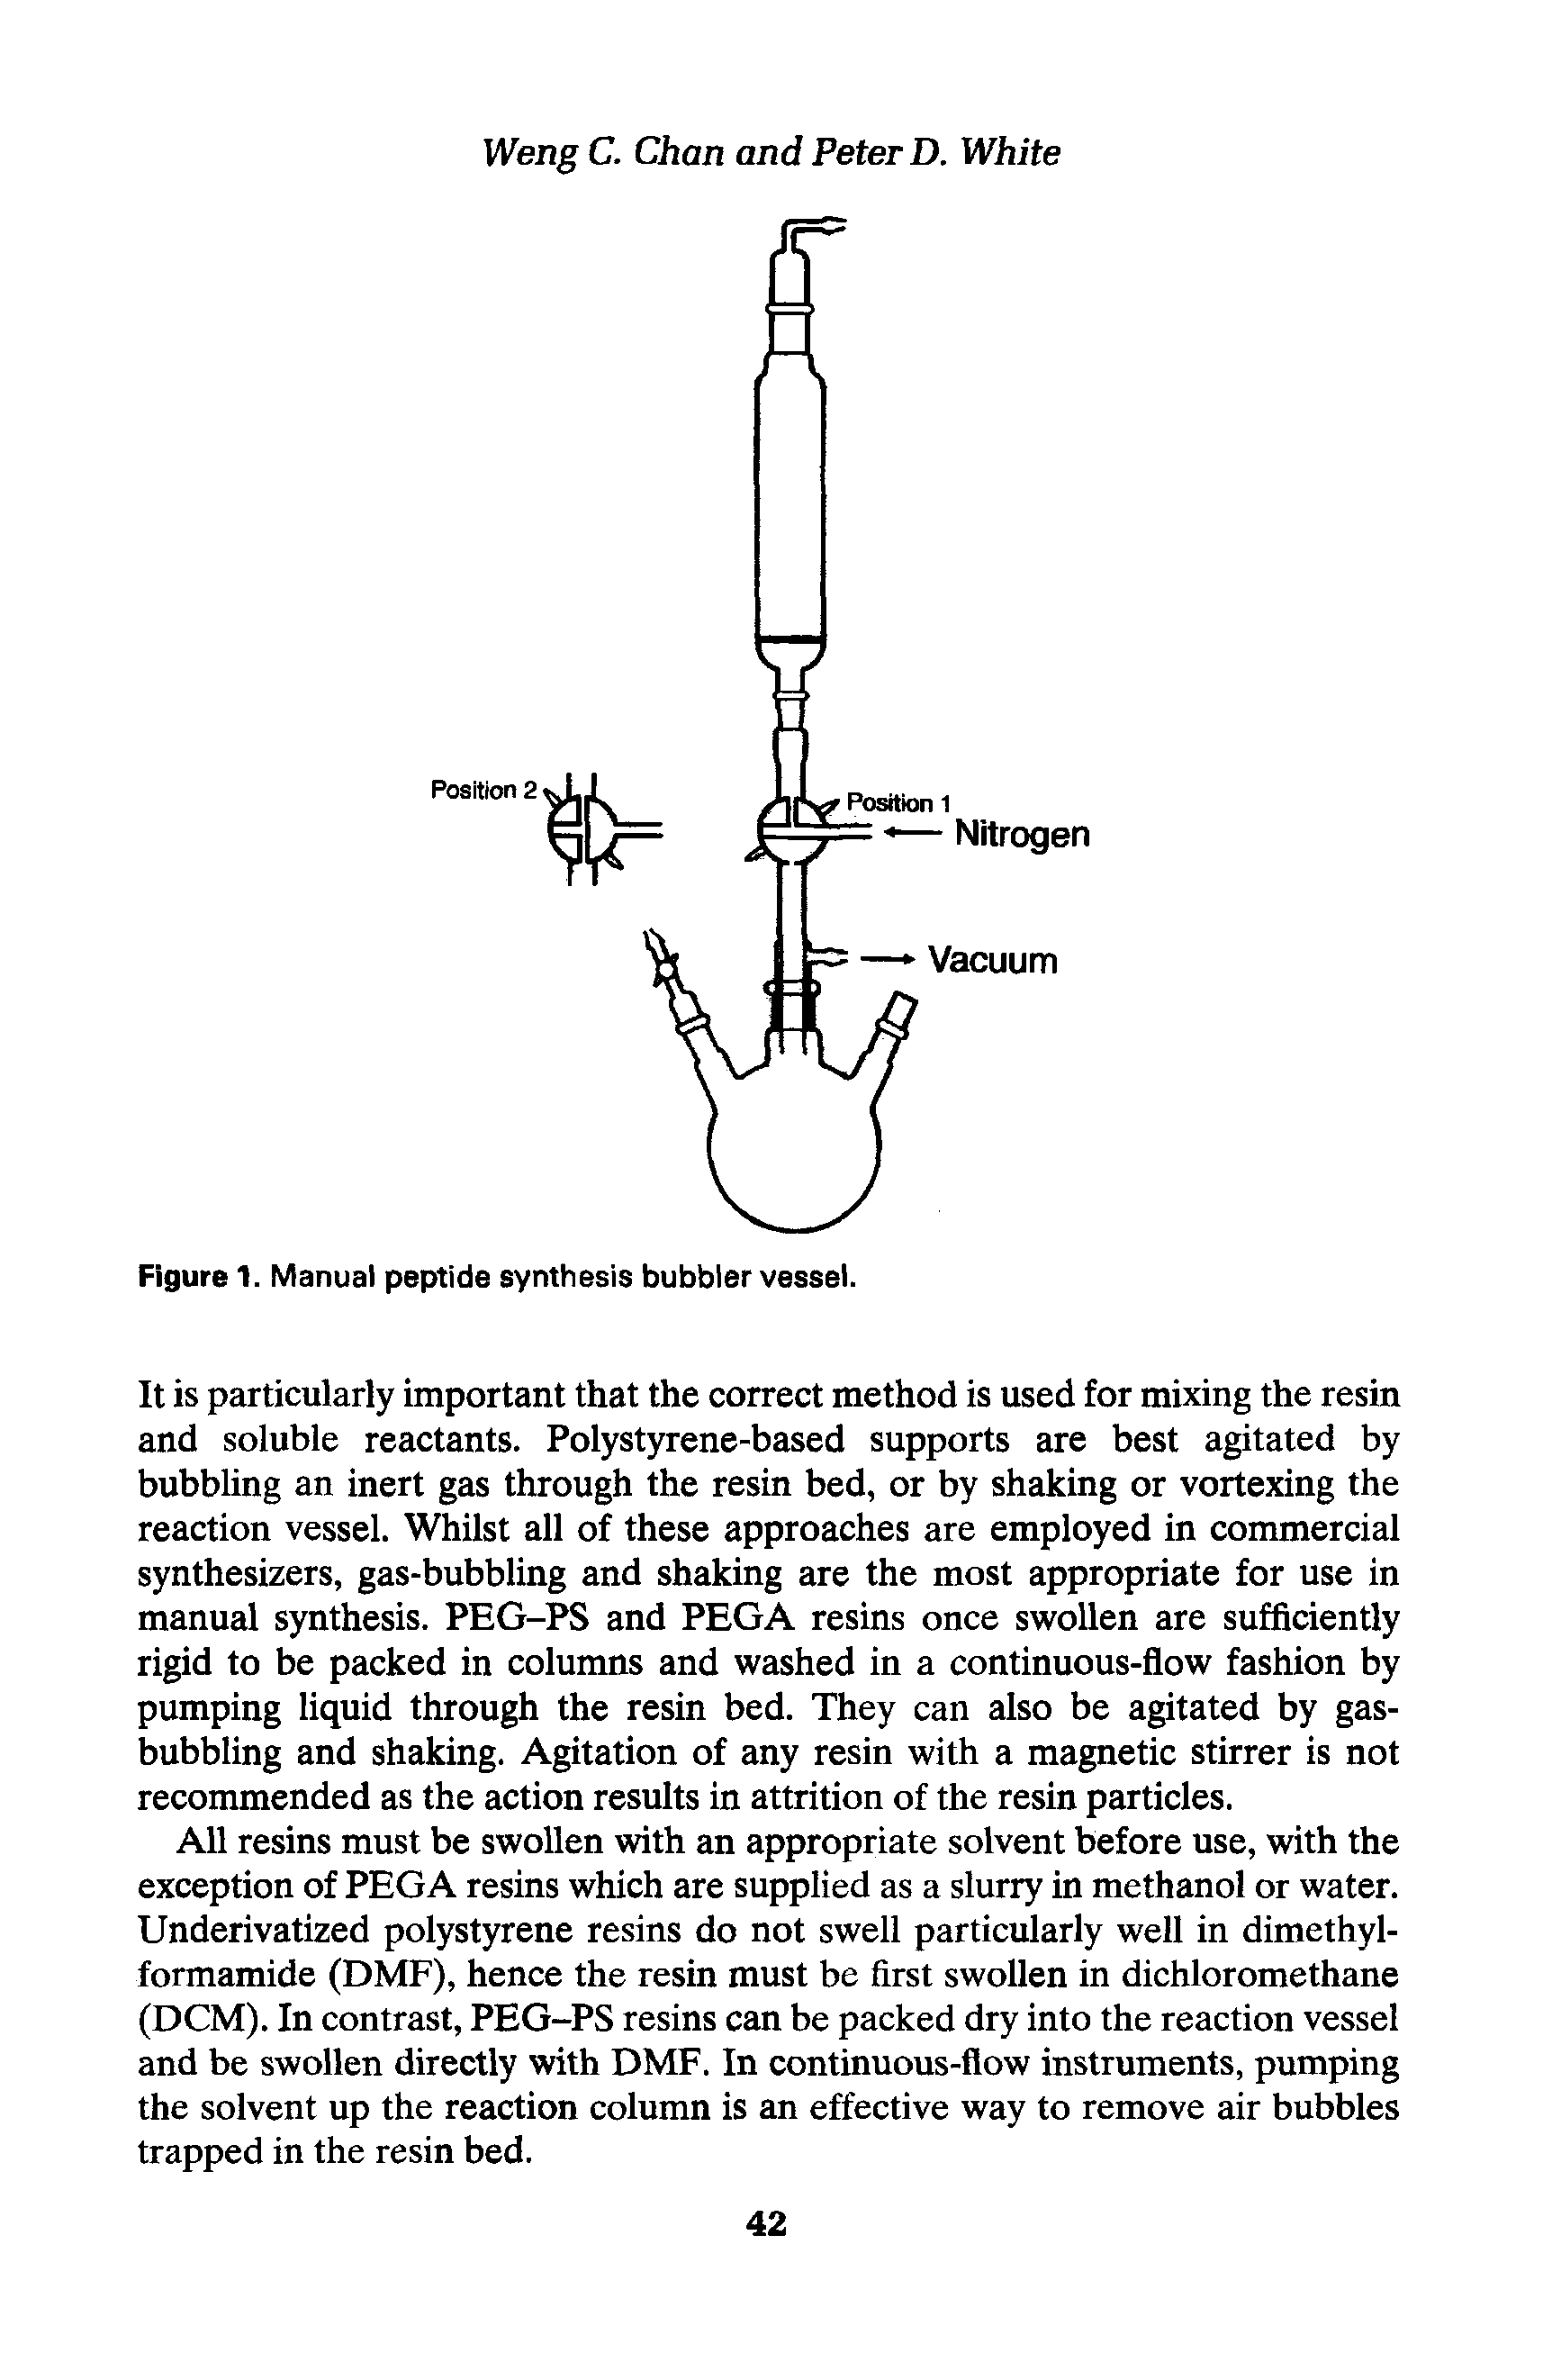 Figure 1. Manual peptide synthesis bubbler vessel.